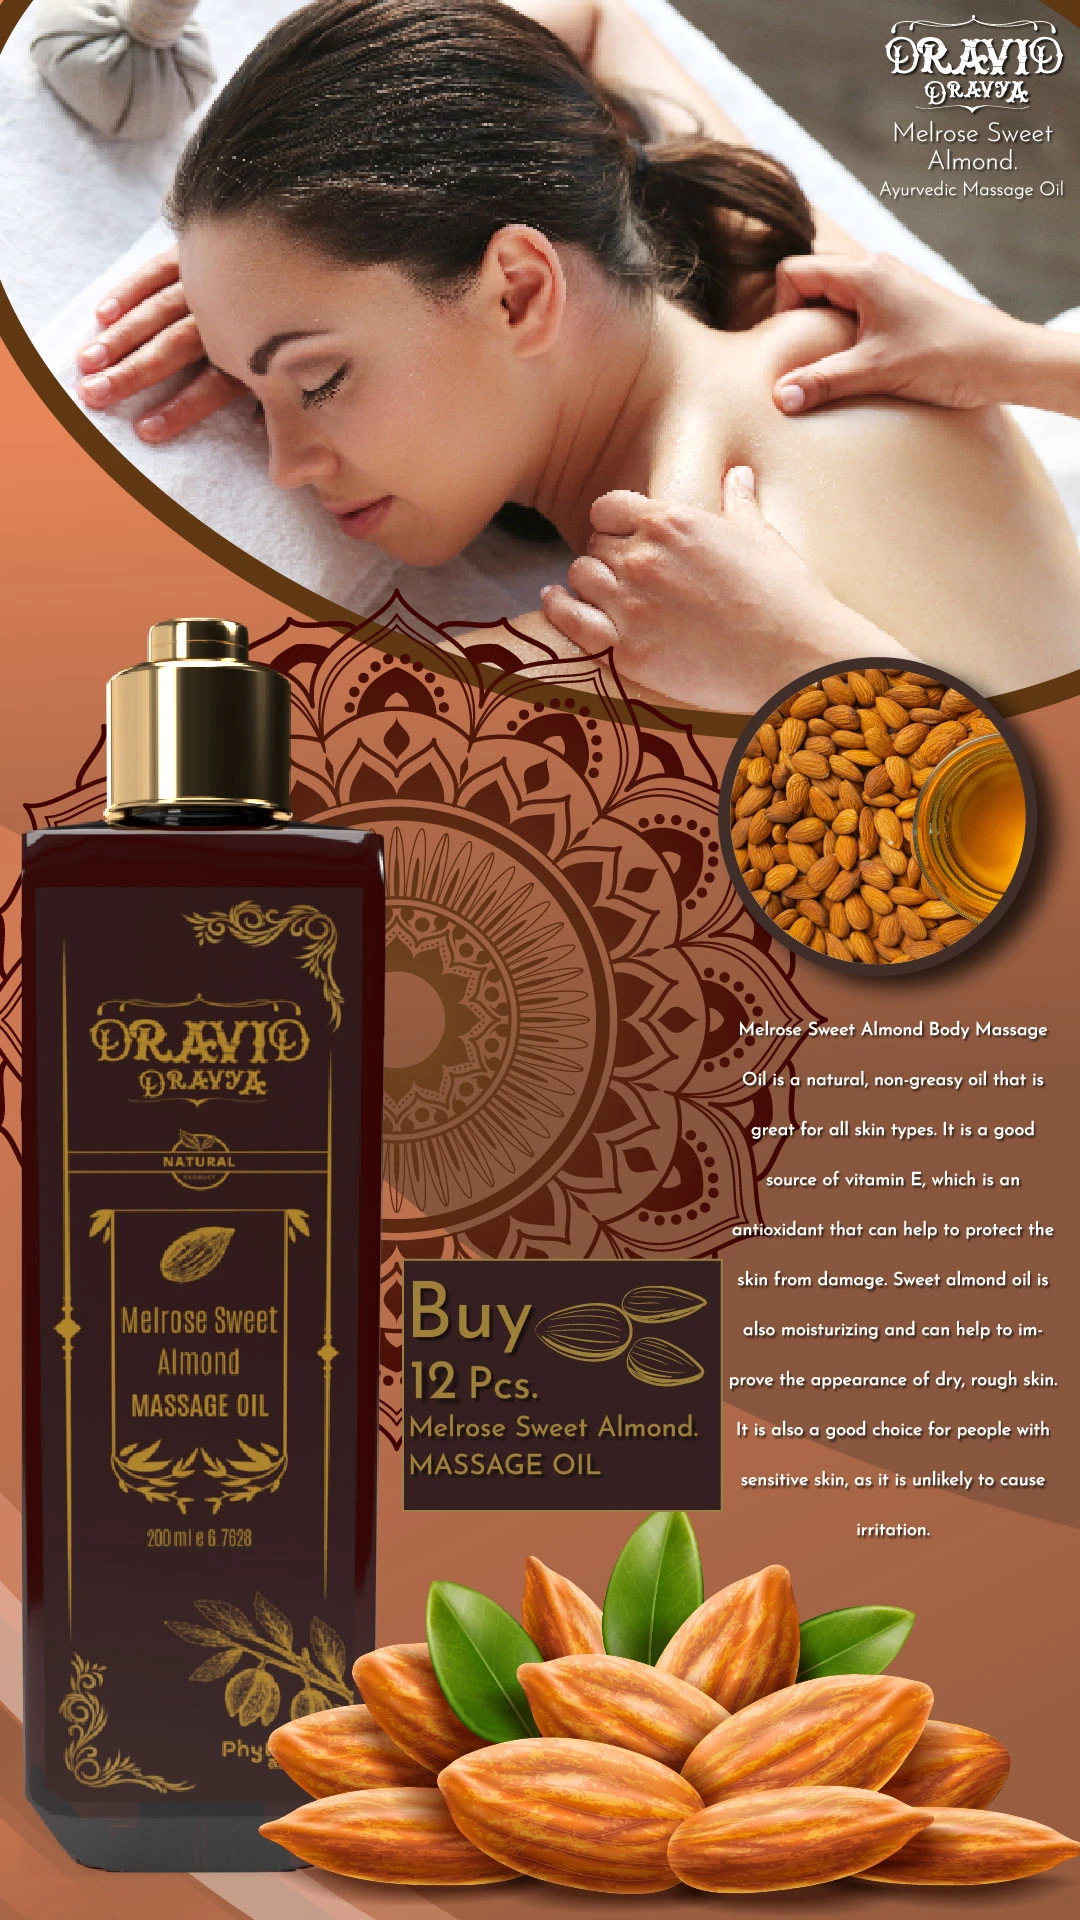 RBV B2B Melrose Sweet Almond Massage Oil (200 ml)-12 Pcs.